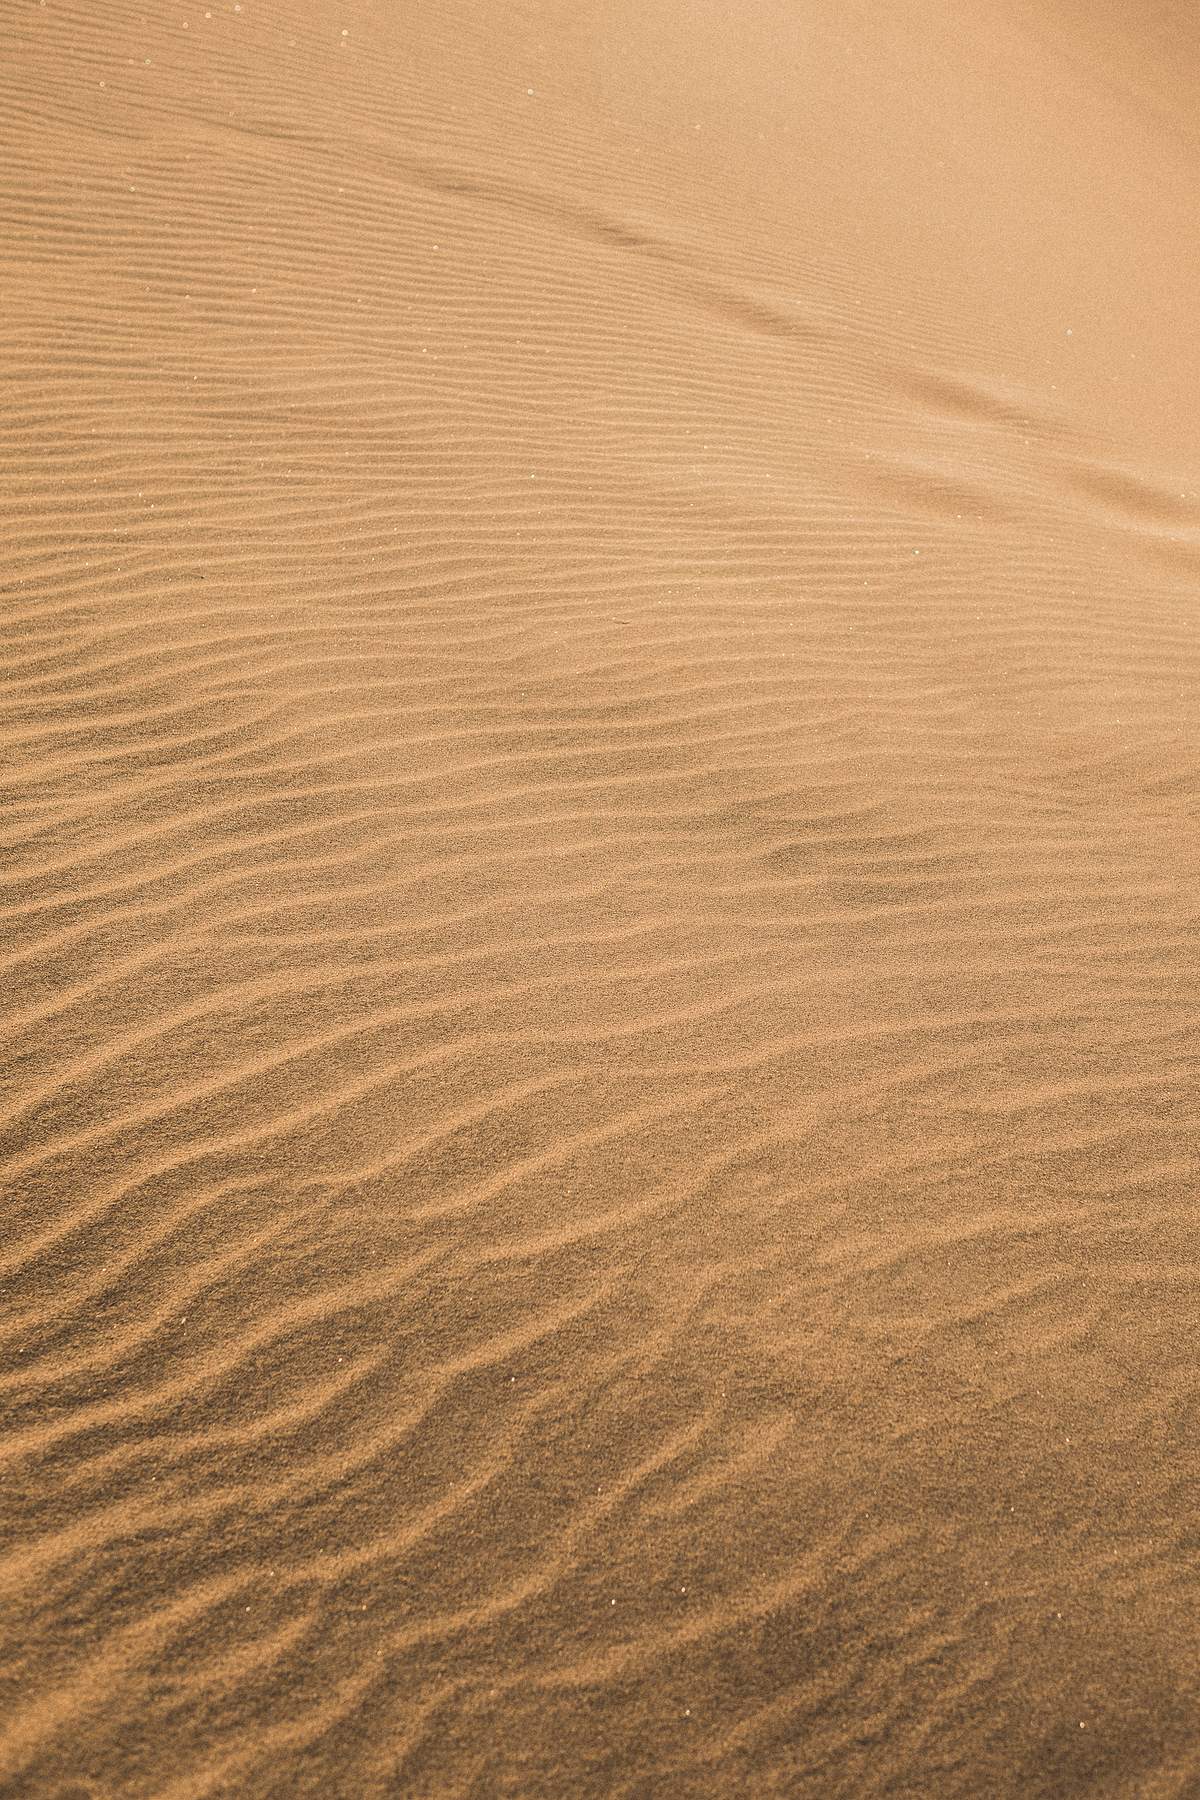 Desert Sand Patterns